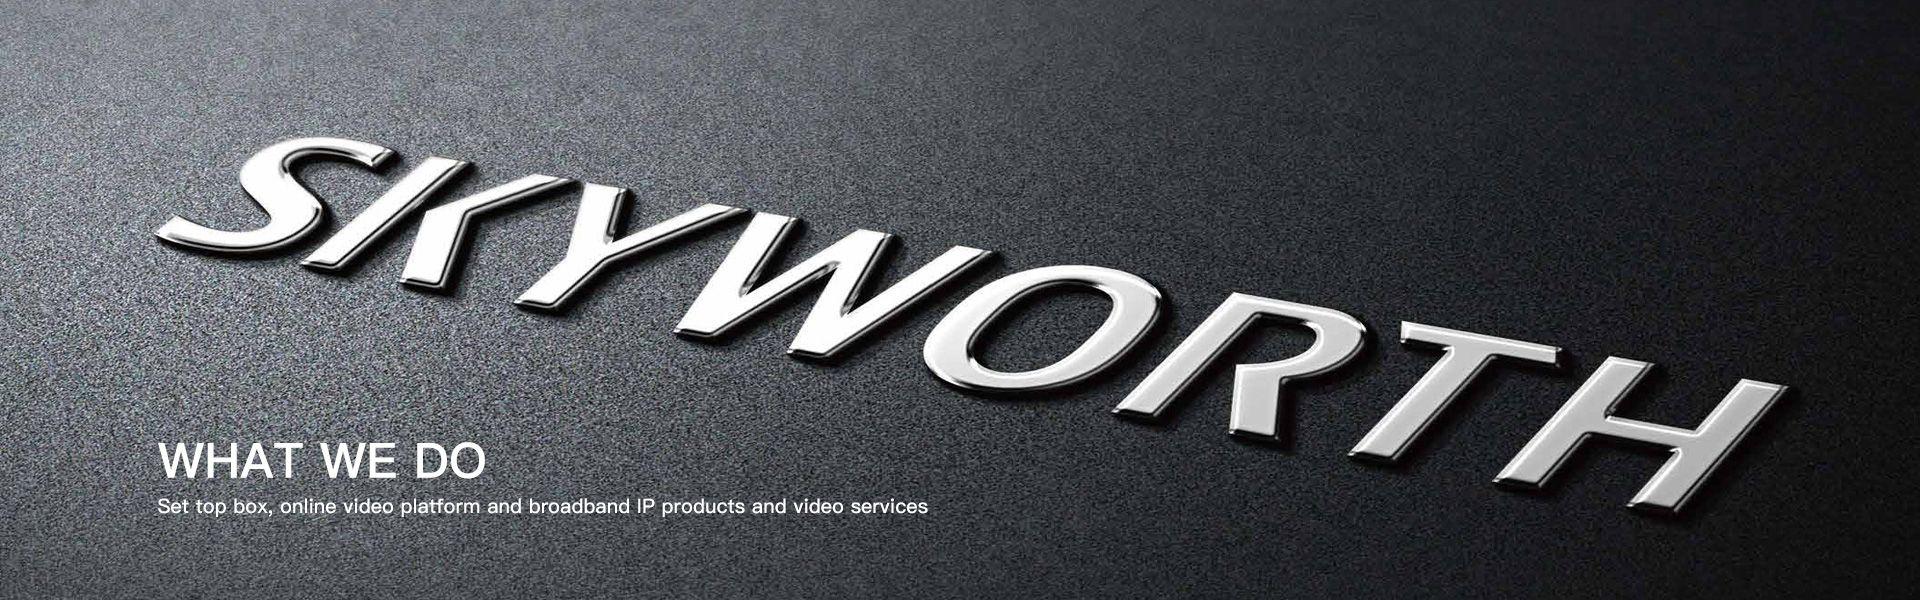 Skyworth Logo - Home,Skyworth Digital